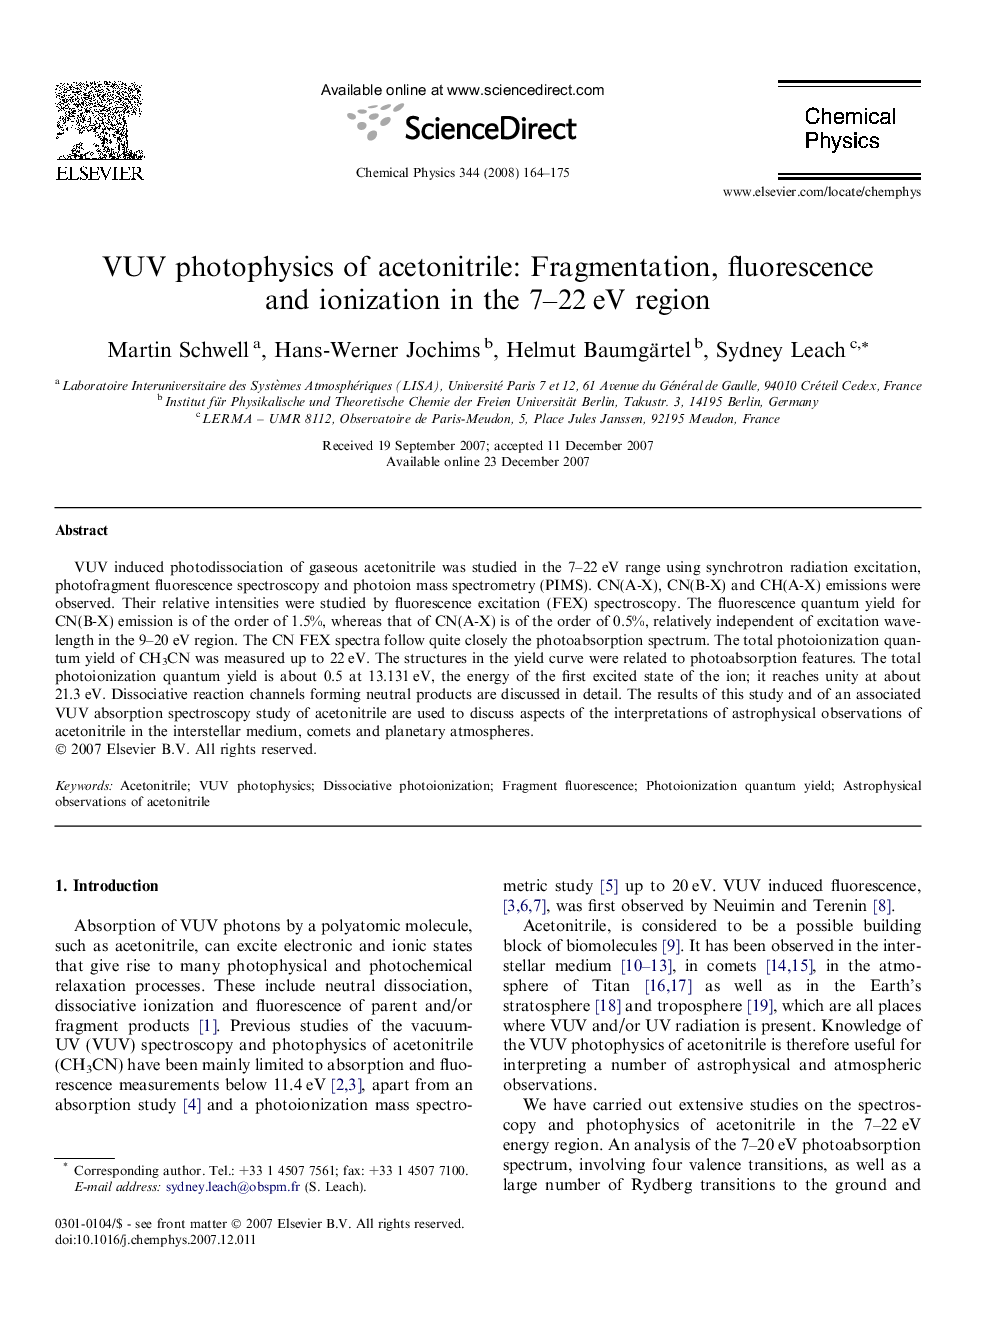 VUV photophysics of acetonitrile: Fragmentation, fluorescence and ionization in the 7-22Â eV region